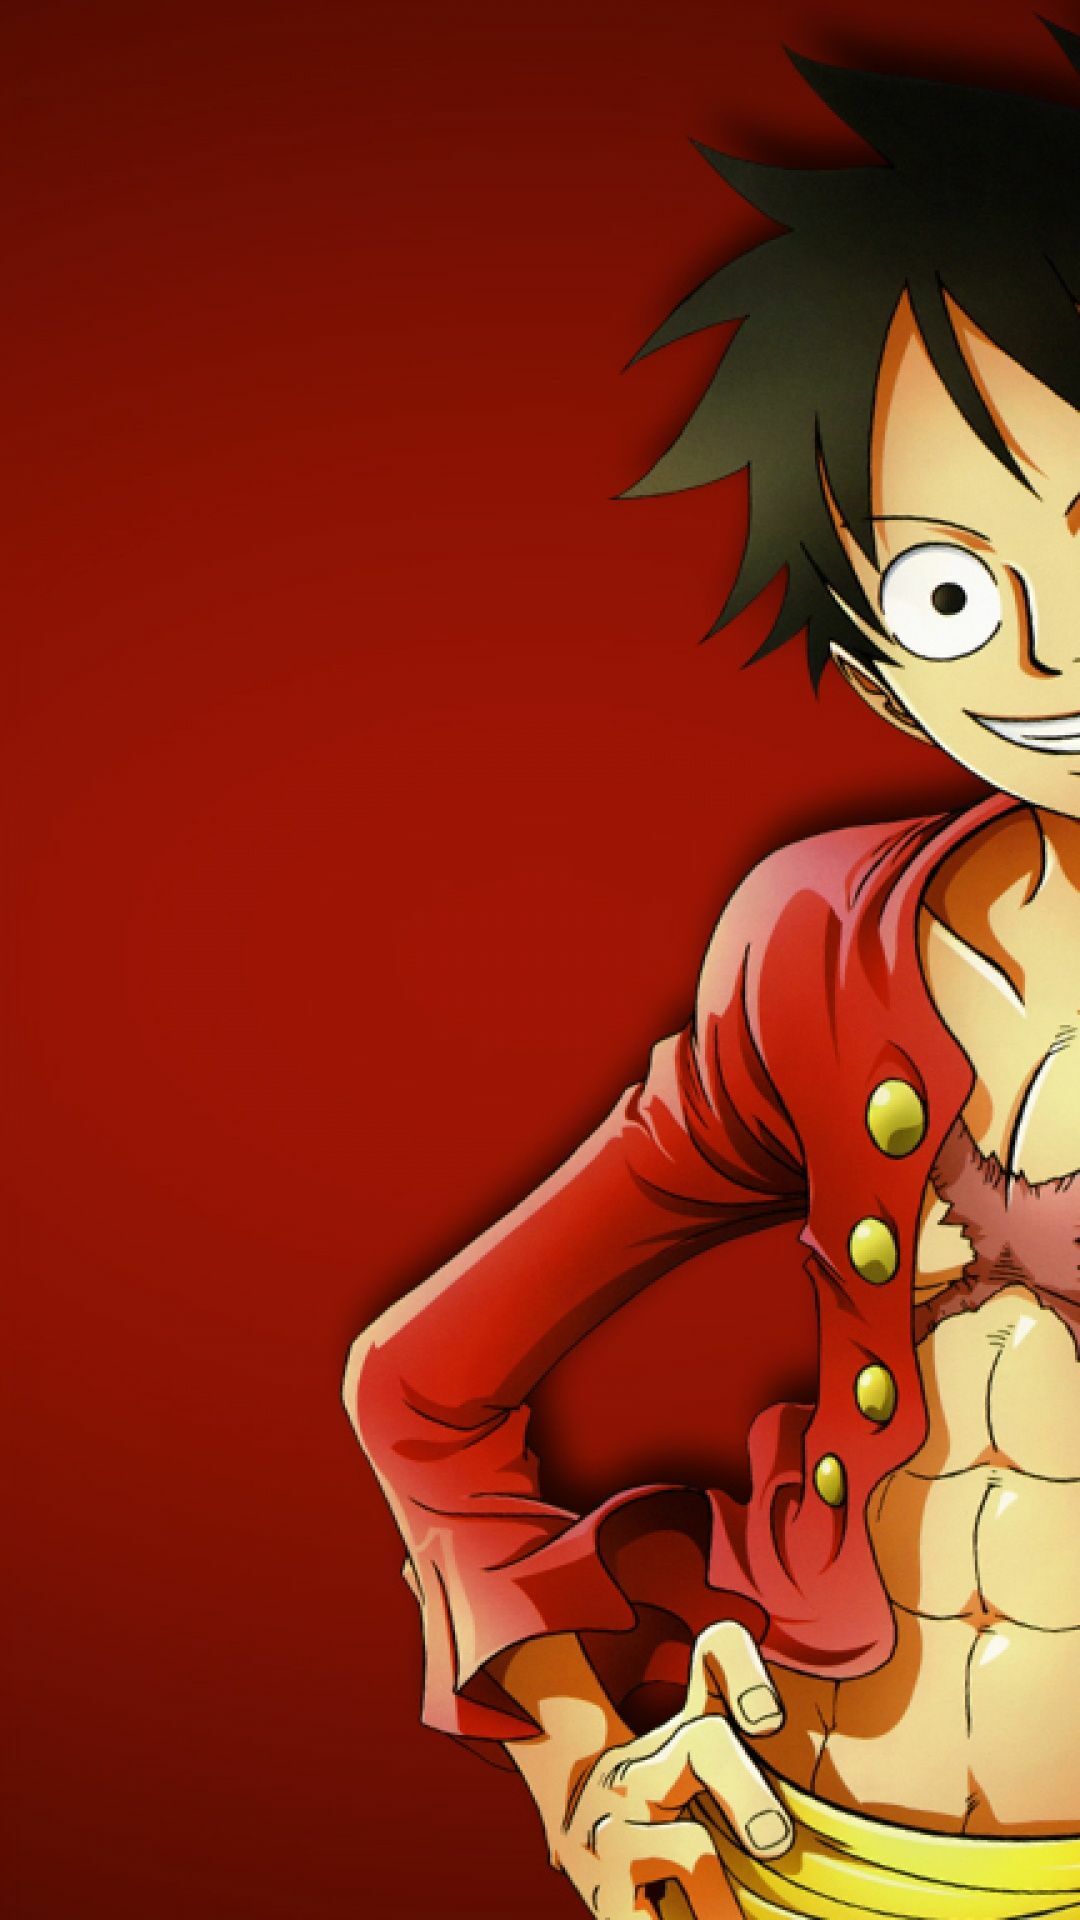 Download Gambar Wallpaper Anime Keren One Piece terbaru 2020